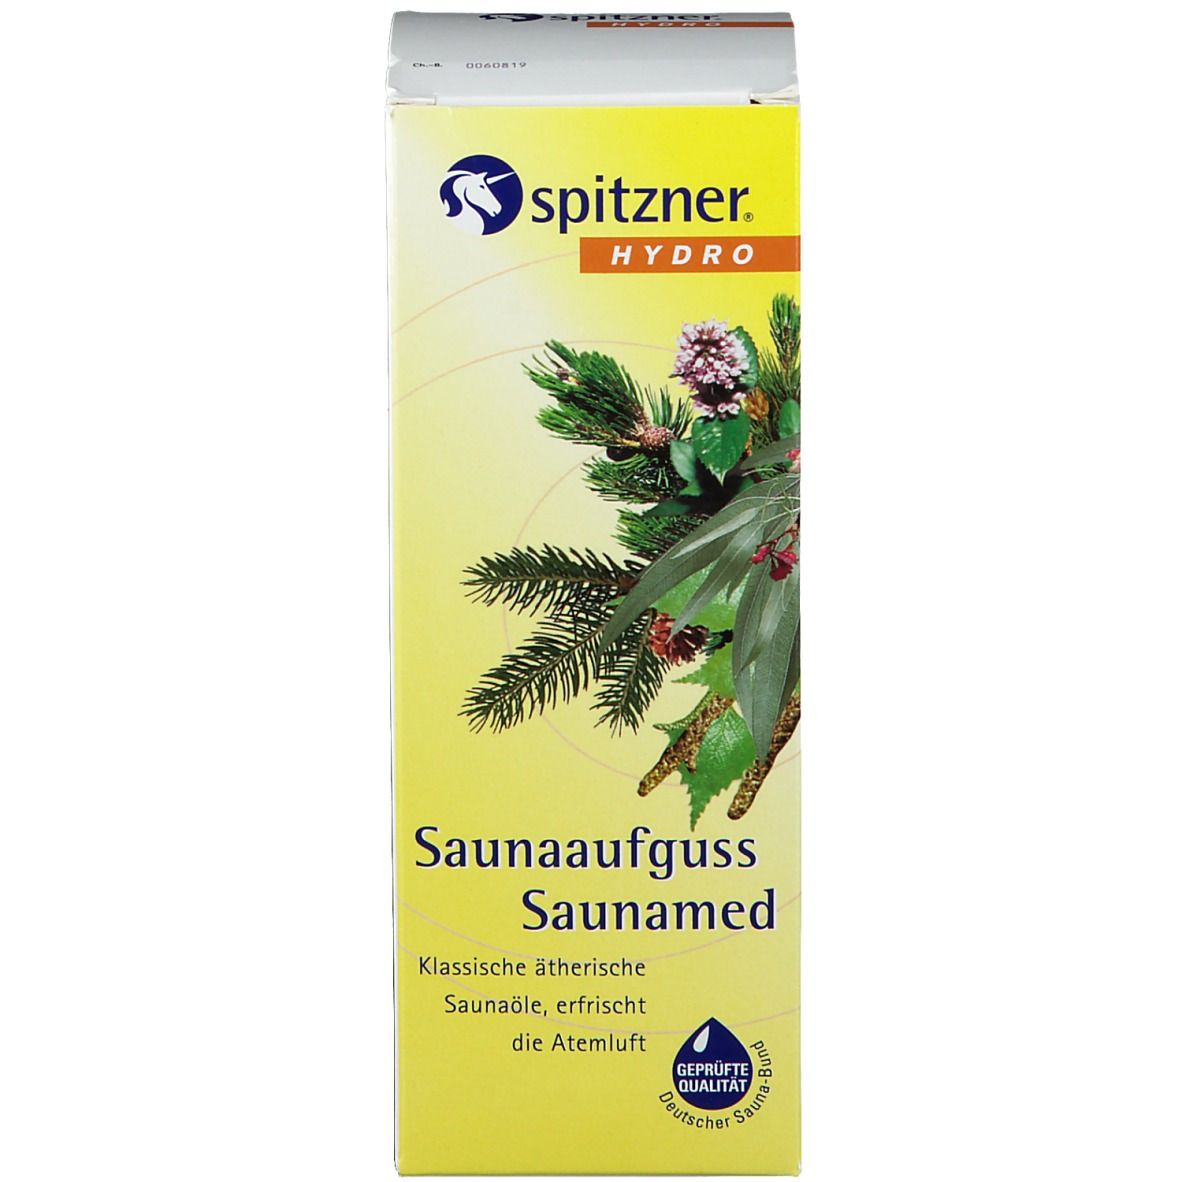 Spitzner® Hydro Saunaaufguss Saunamed